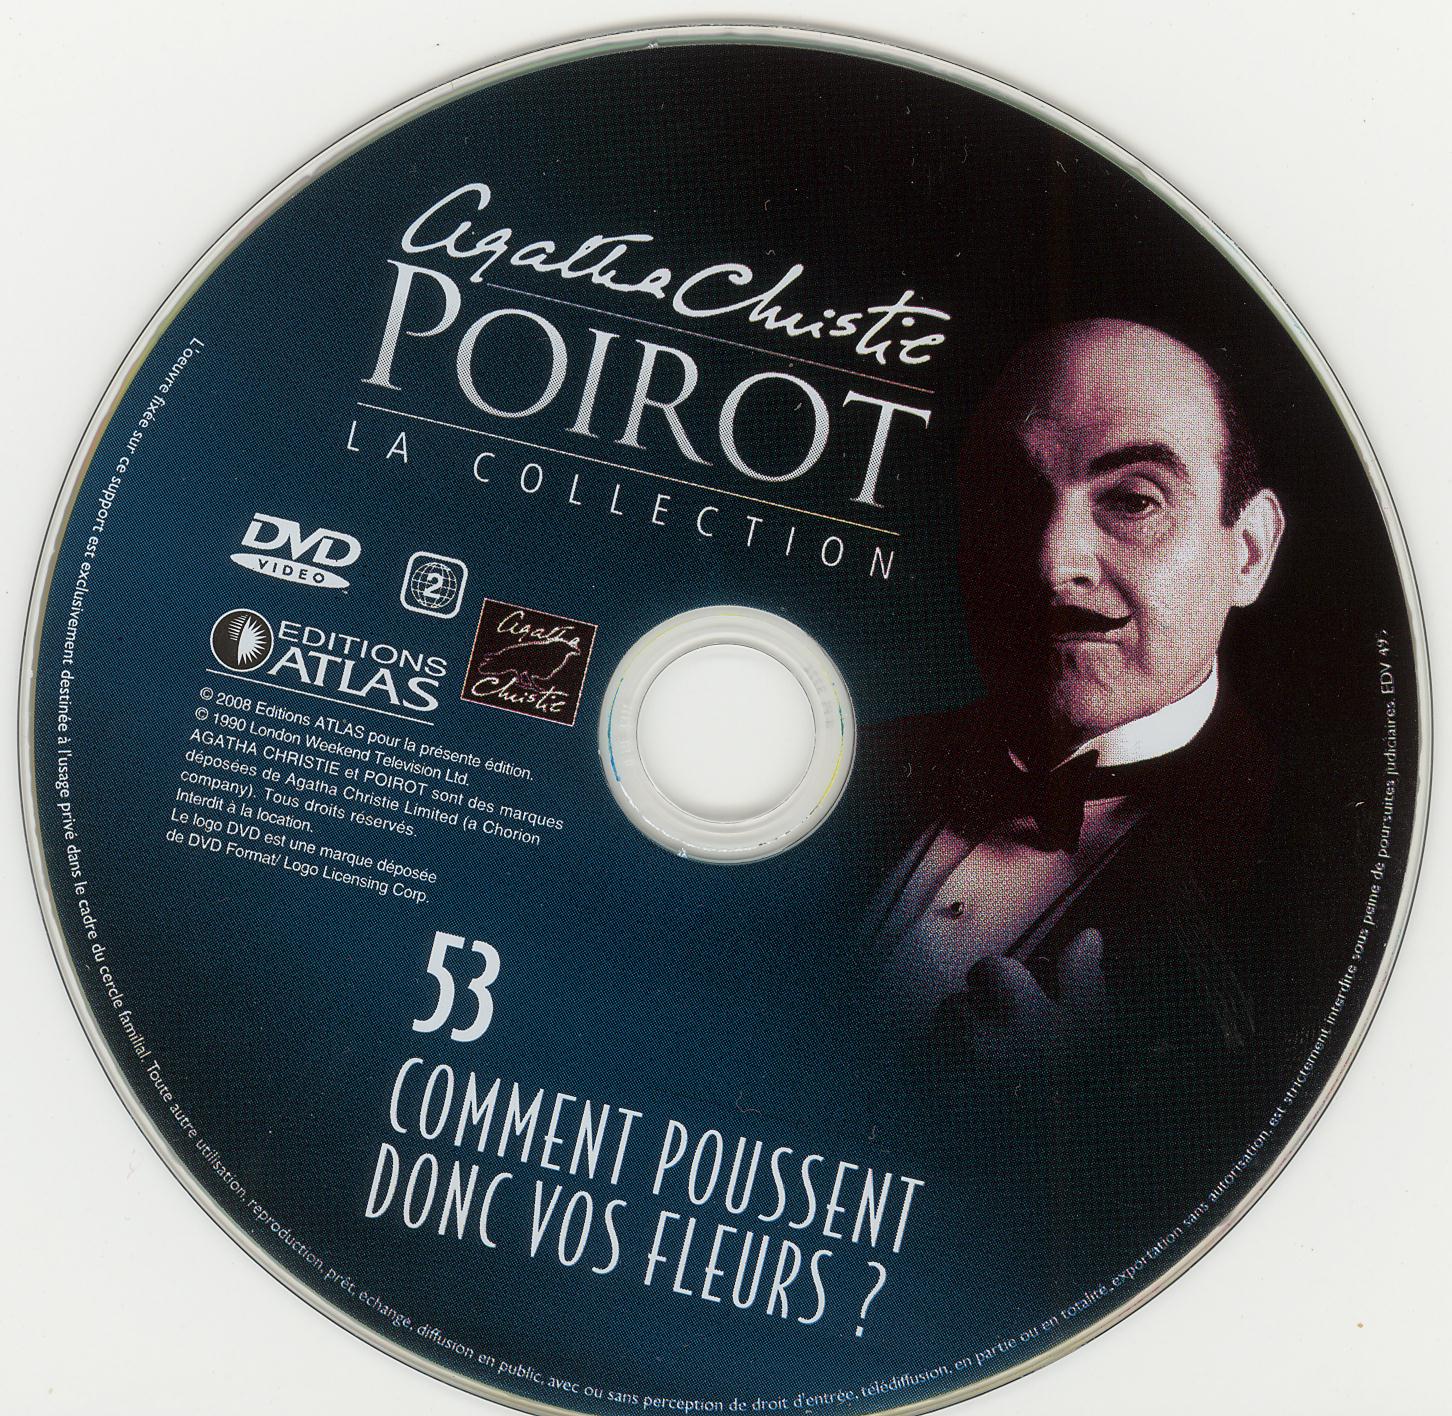 Hercule Poirot vol 53